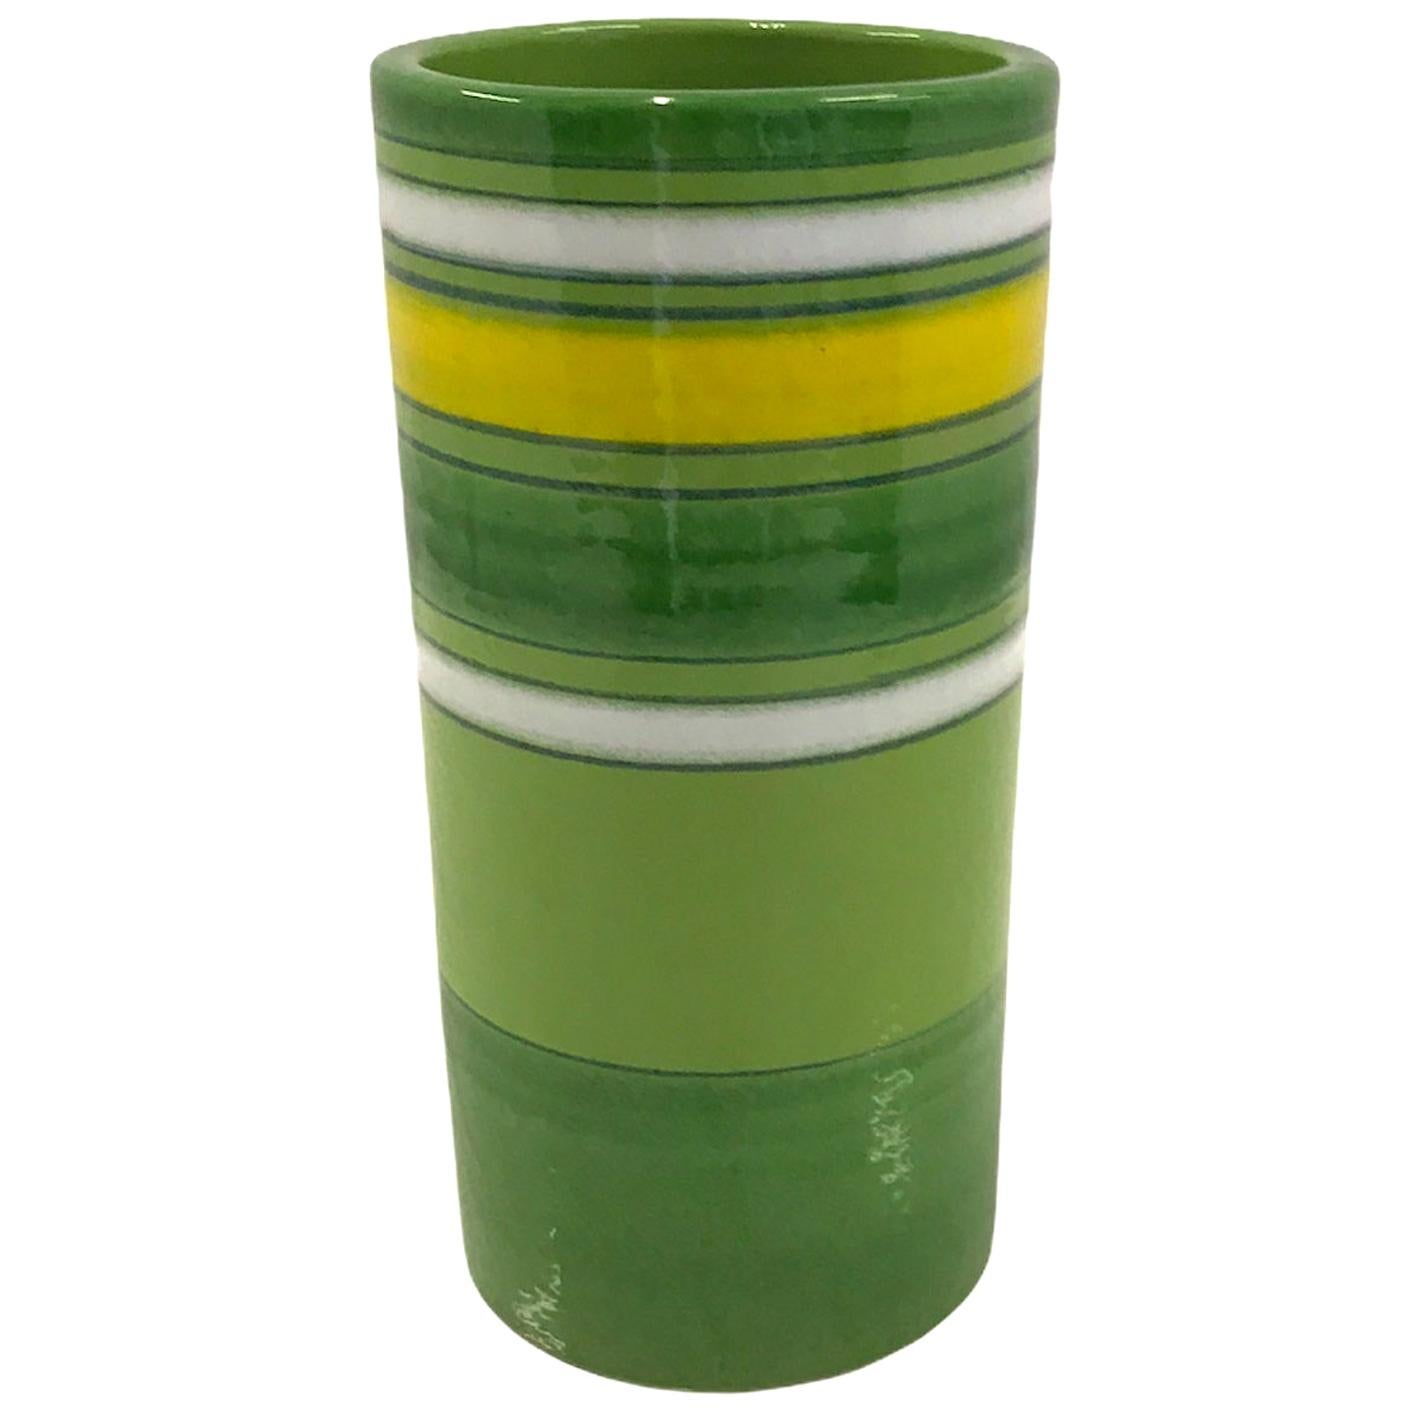 Aldo Londi Bitossi Fascie Colorate Green Cylindrical Vase Rosenthal Netter 70s